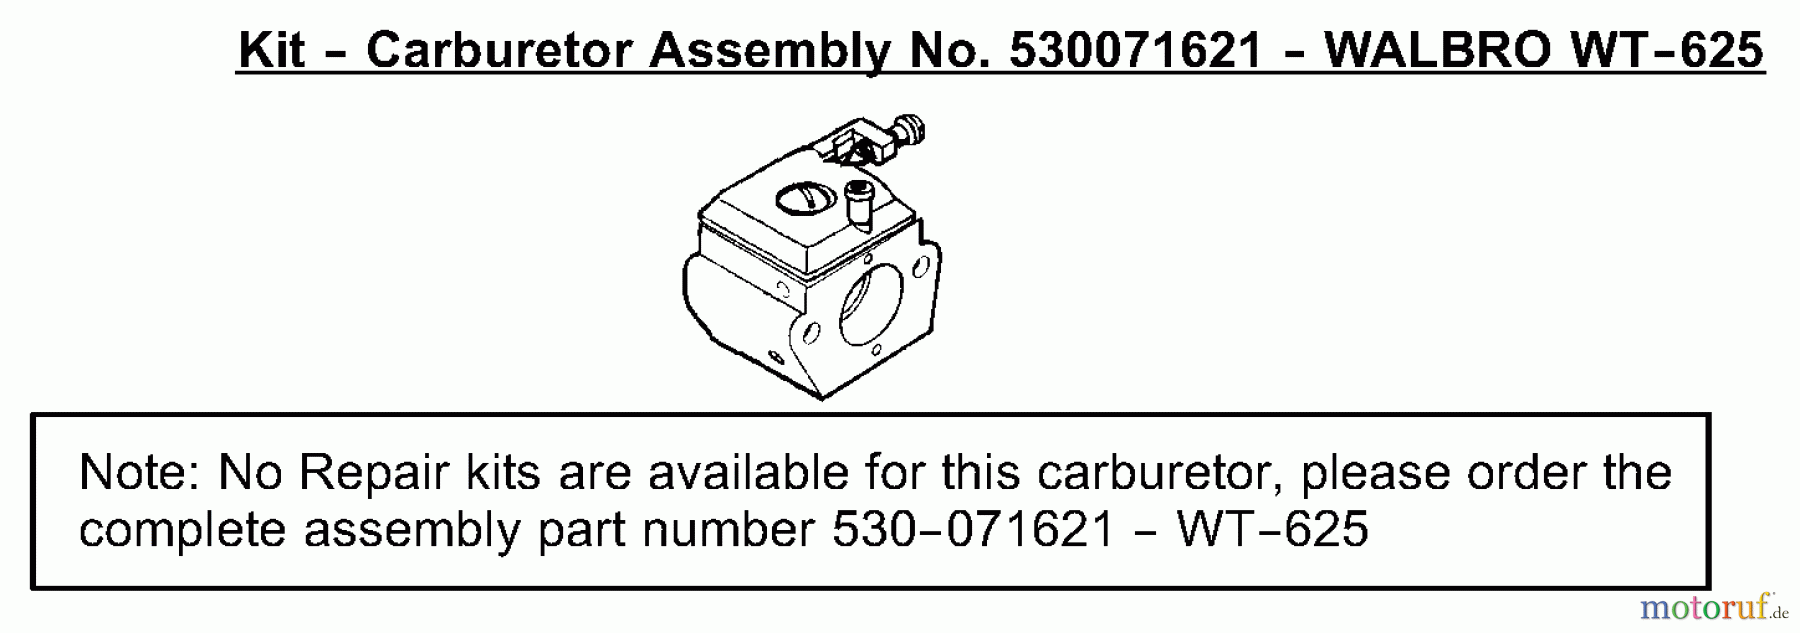  Poulan / Weed Eater Motorsägen PP221 (Type 2) - Poulan Pro Chainsaw Carburetor Assembly (Walbro WT625) 530071621